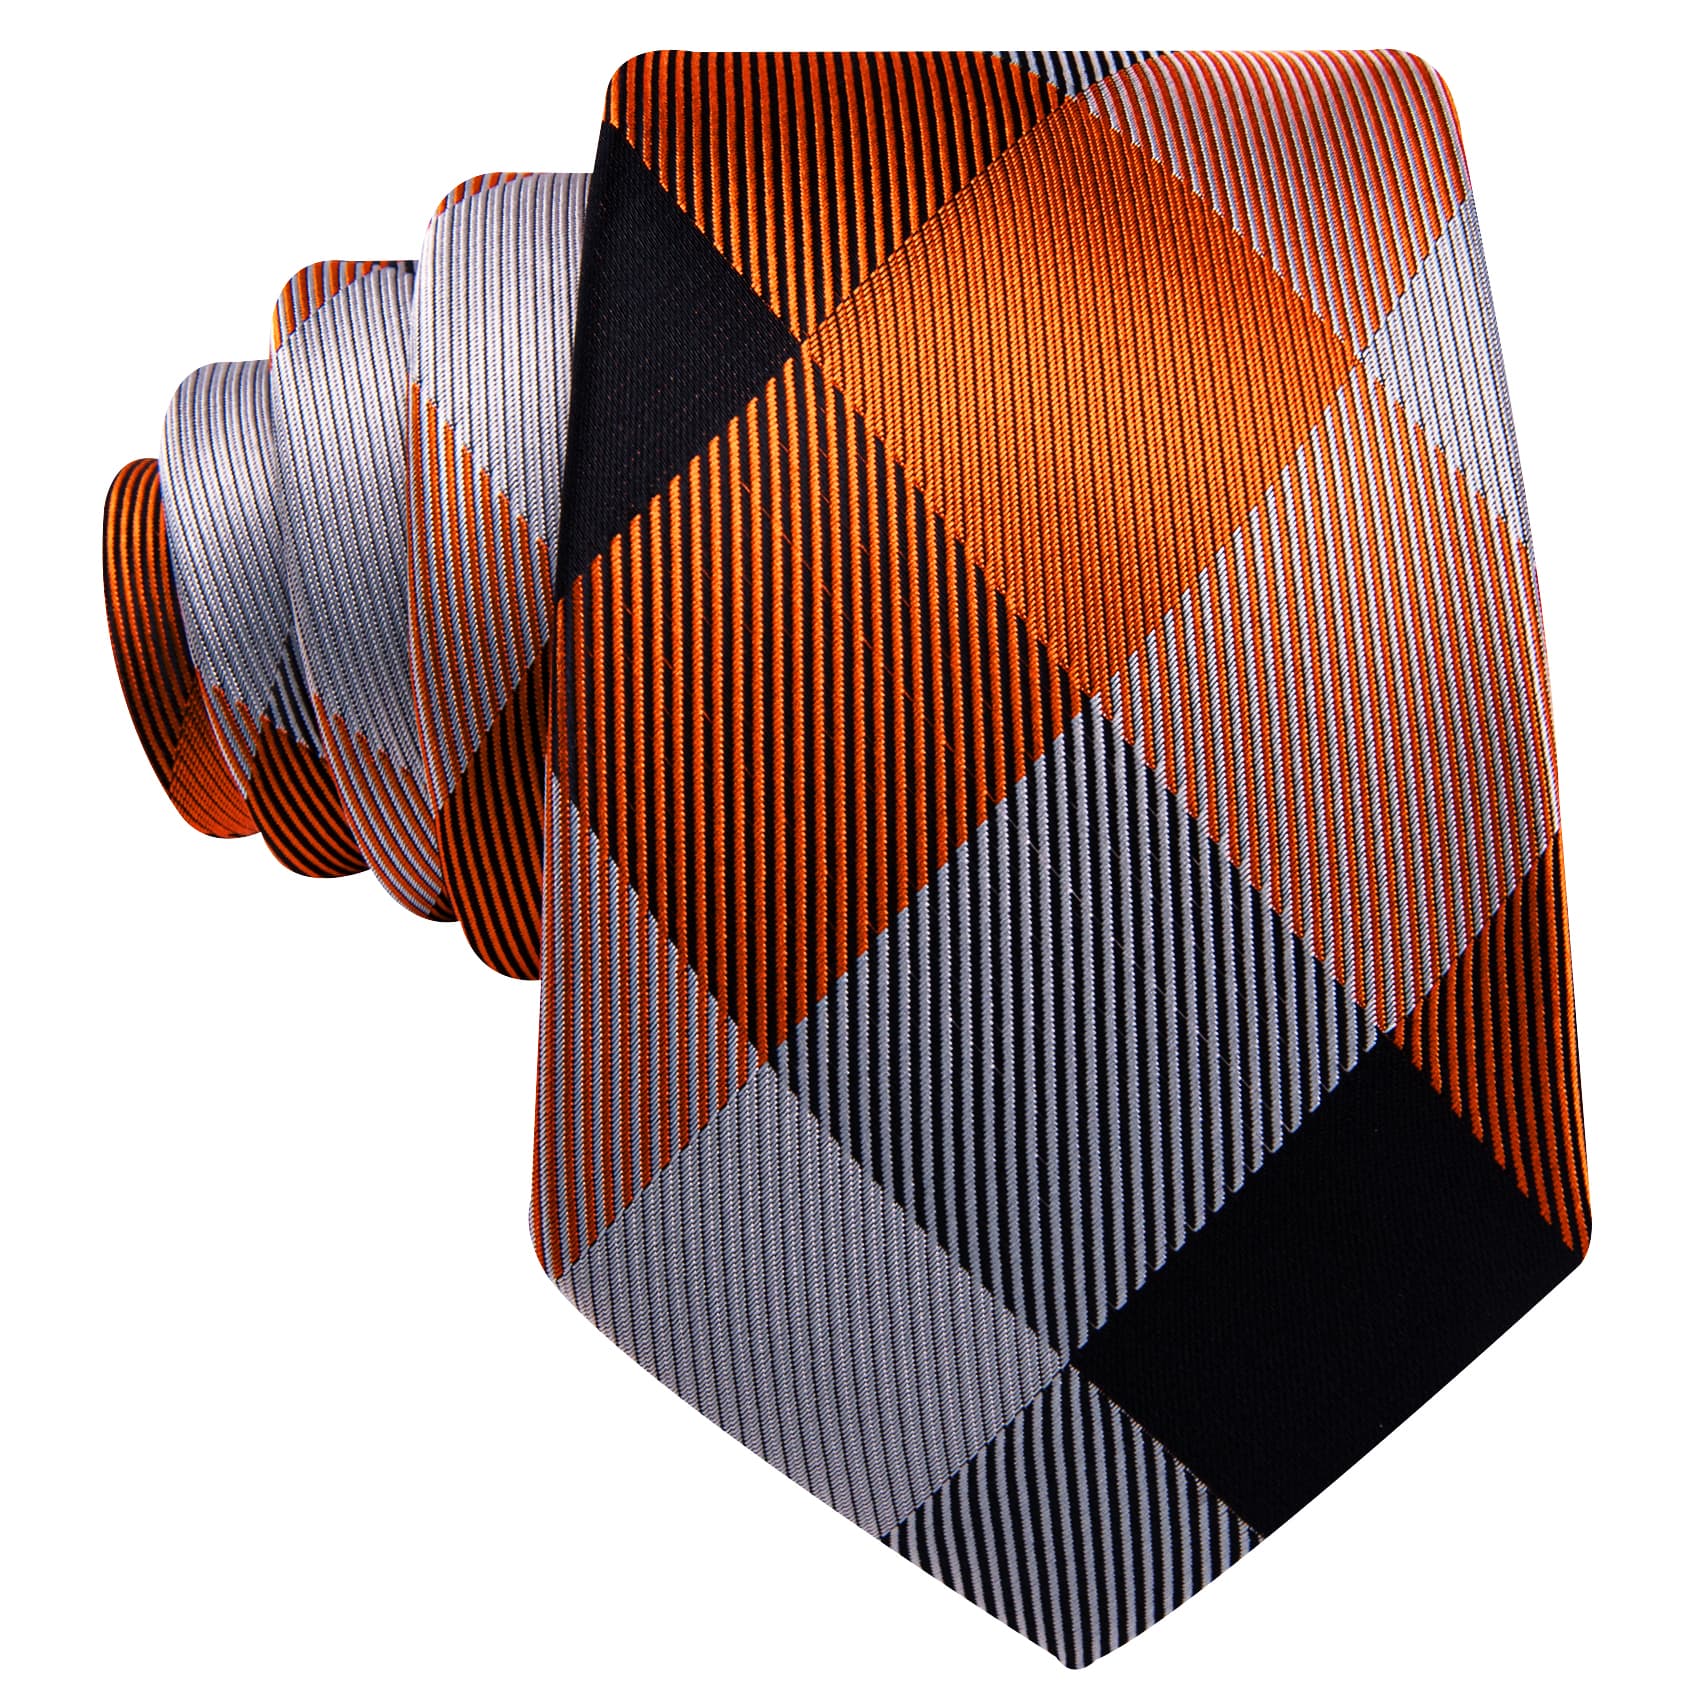  Tie Orange Black Gray Necktie Hanky Cufflinks Set